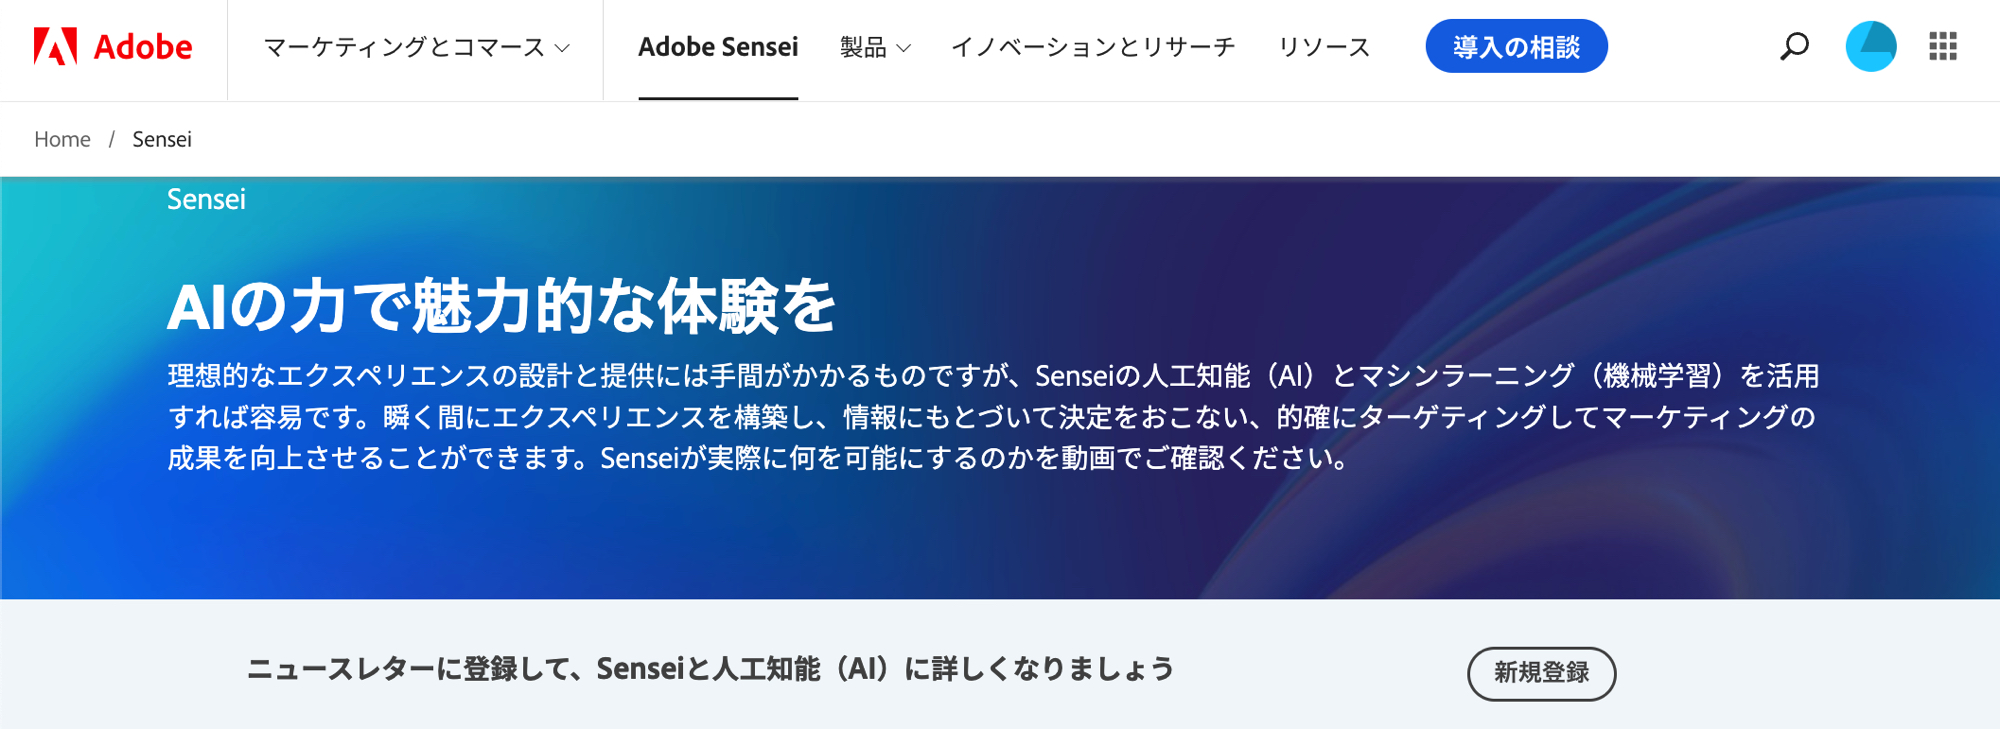 『Adobe Sensei』歴史と先進性